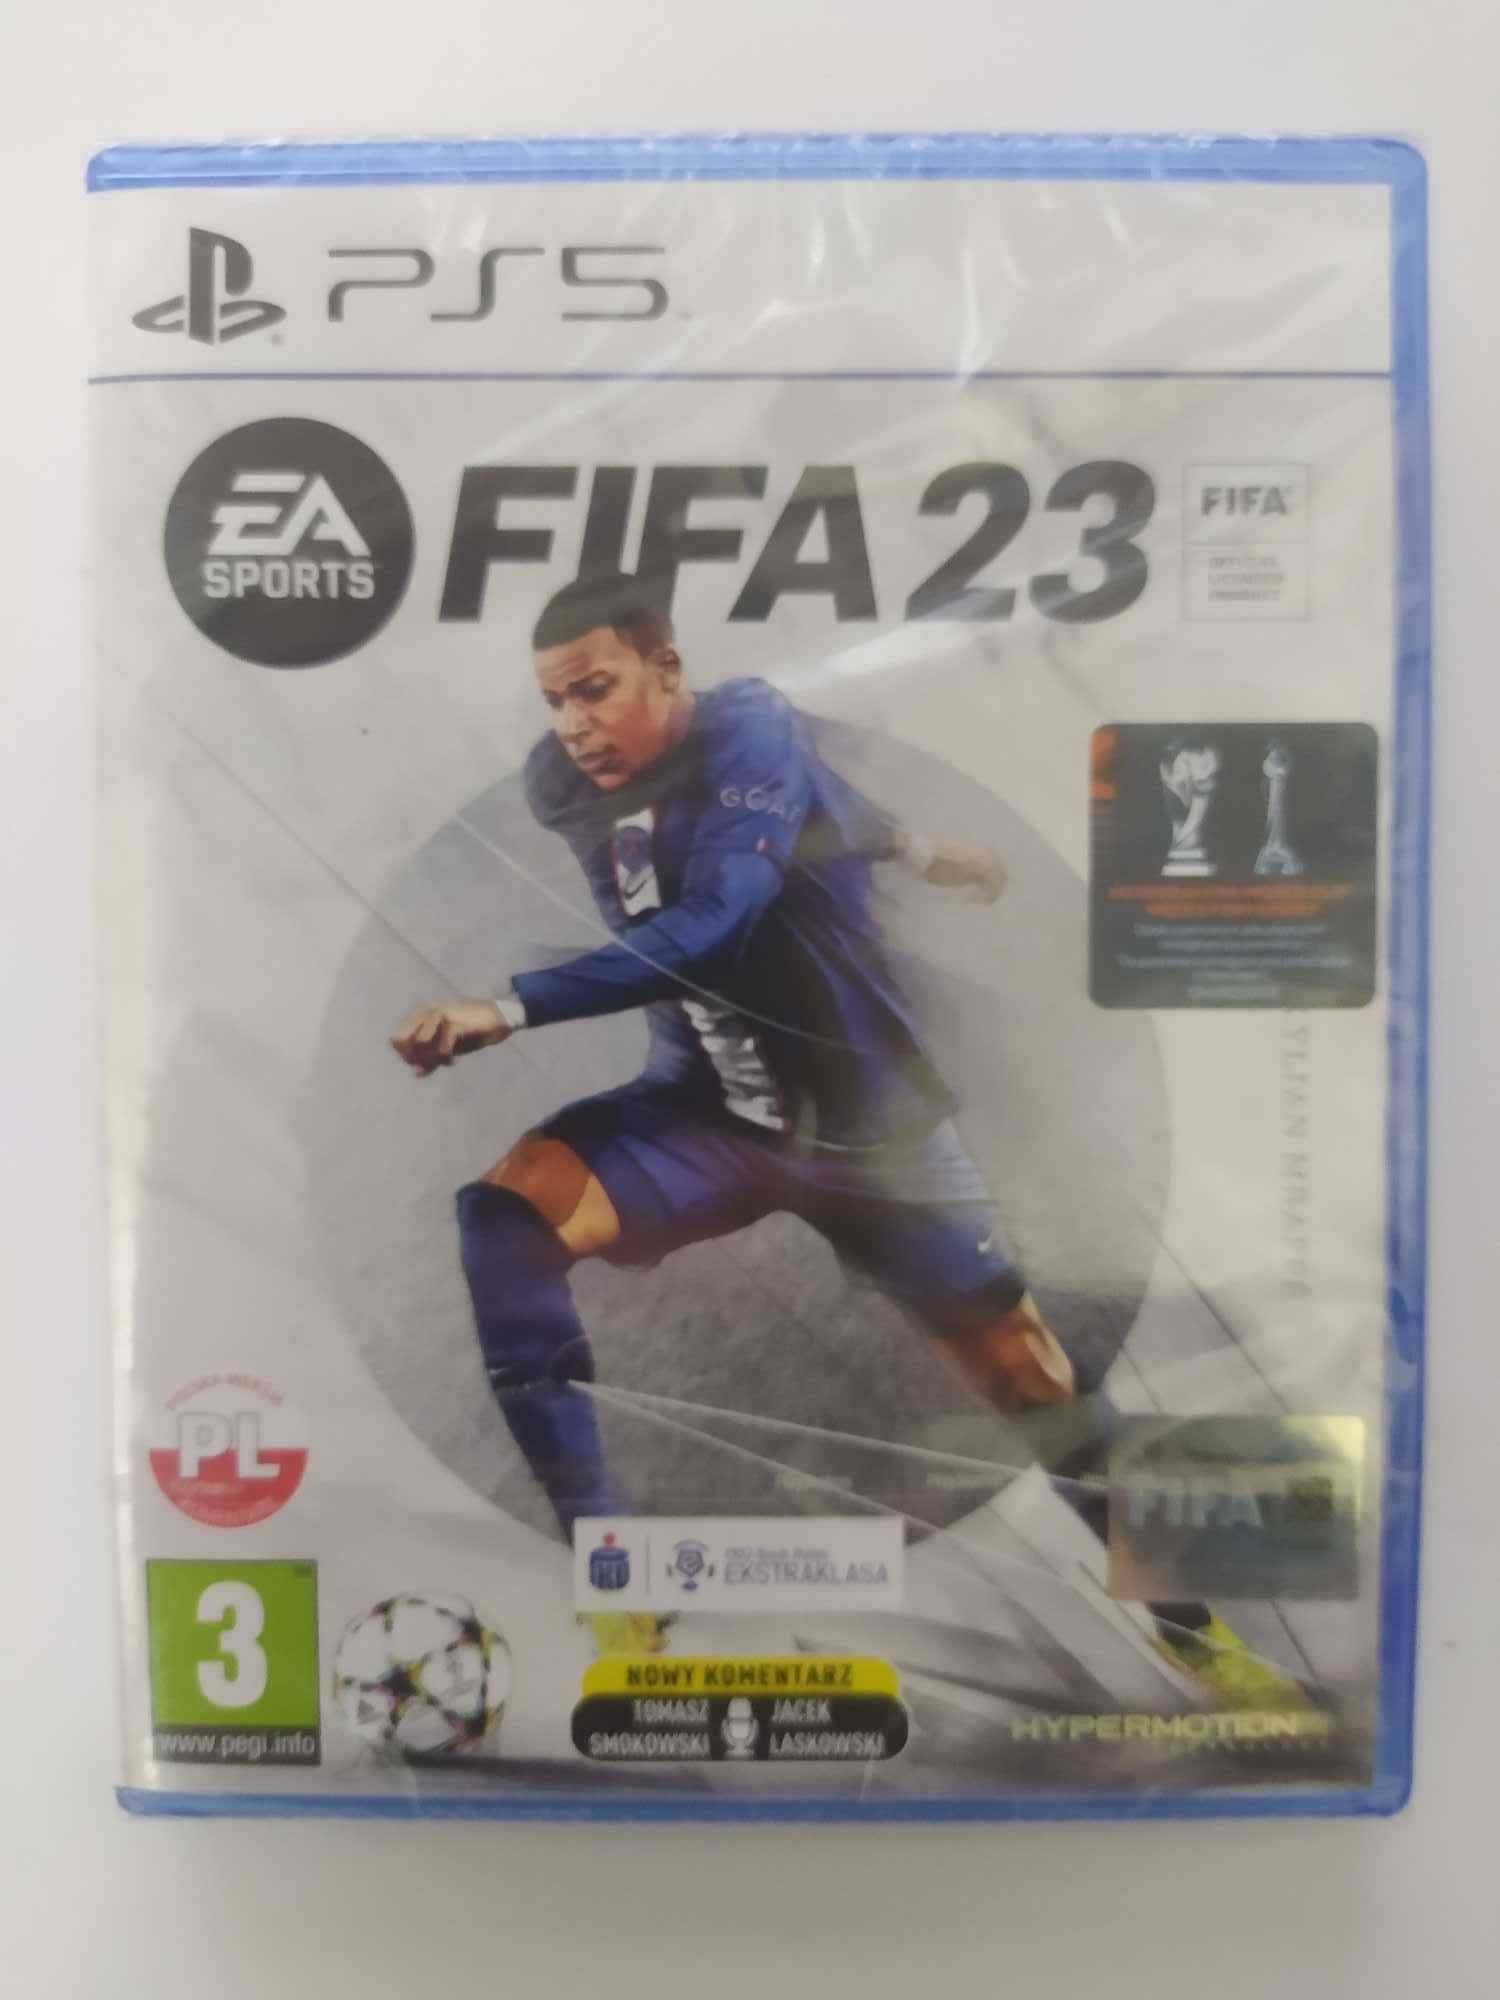 NOWA FIFA 23 PS5 Polska wersja